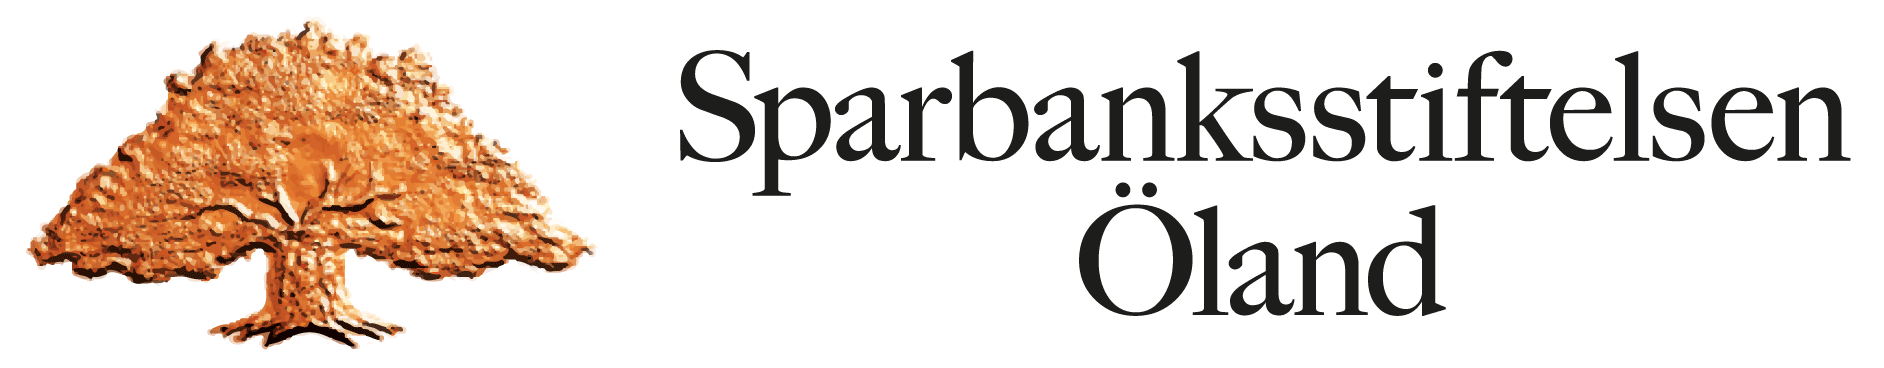 sparbanksstiftelsen_logo_web